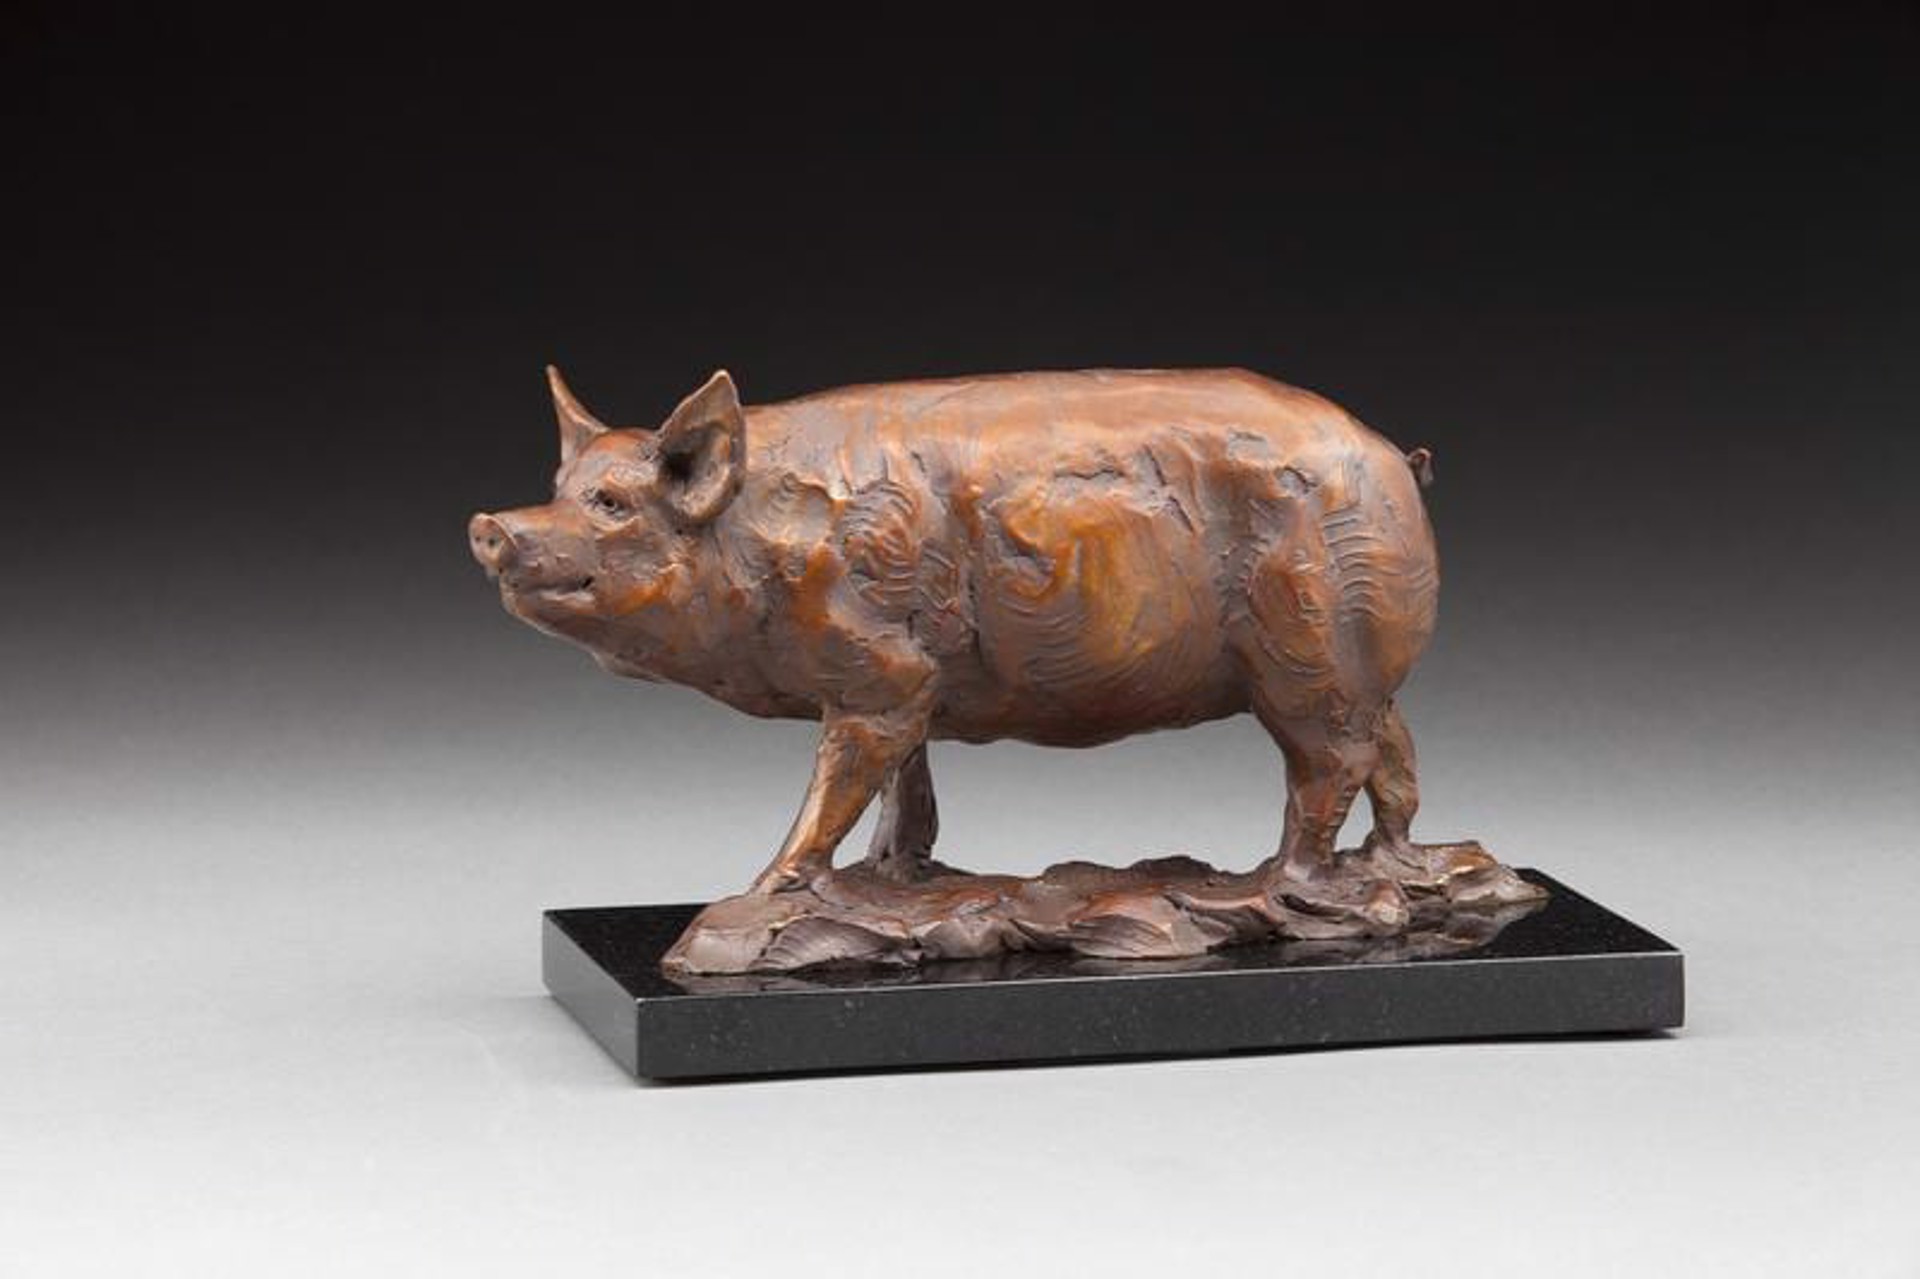 One Fine Pig by Daniel Glanz (sculptor)